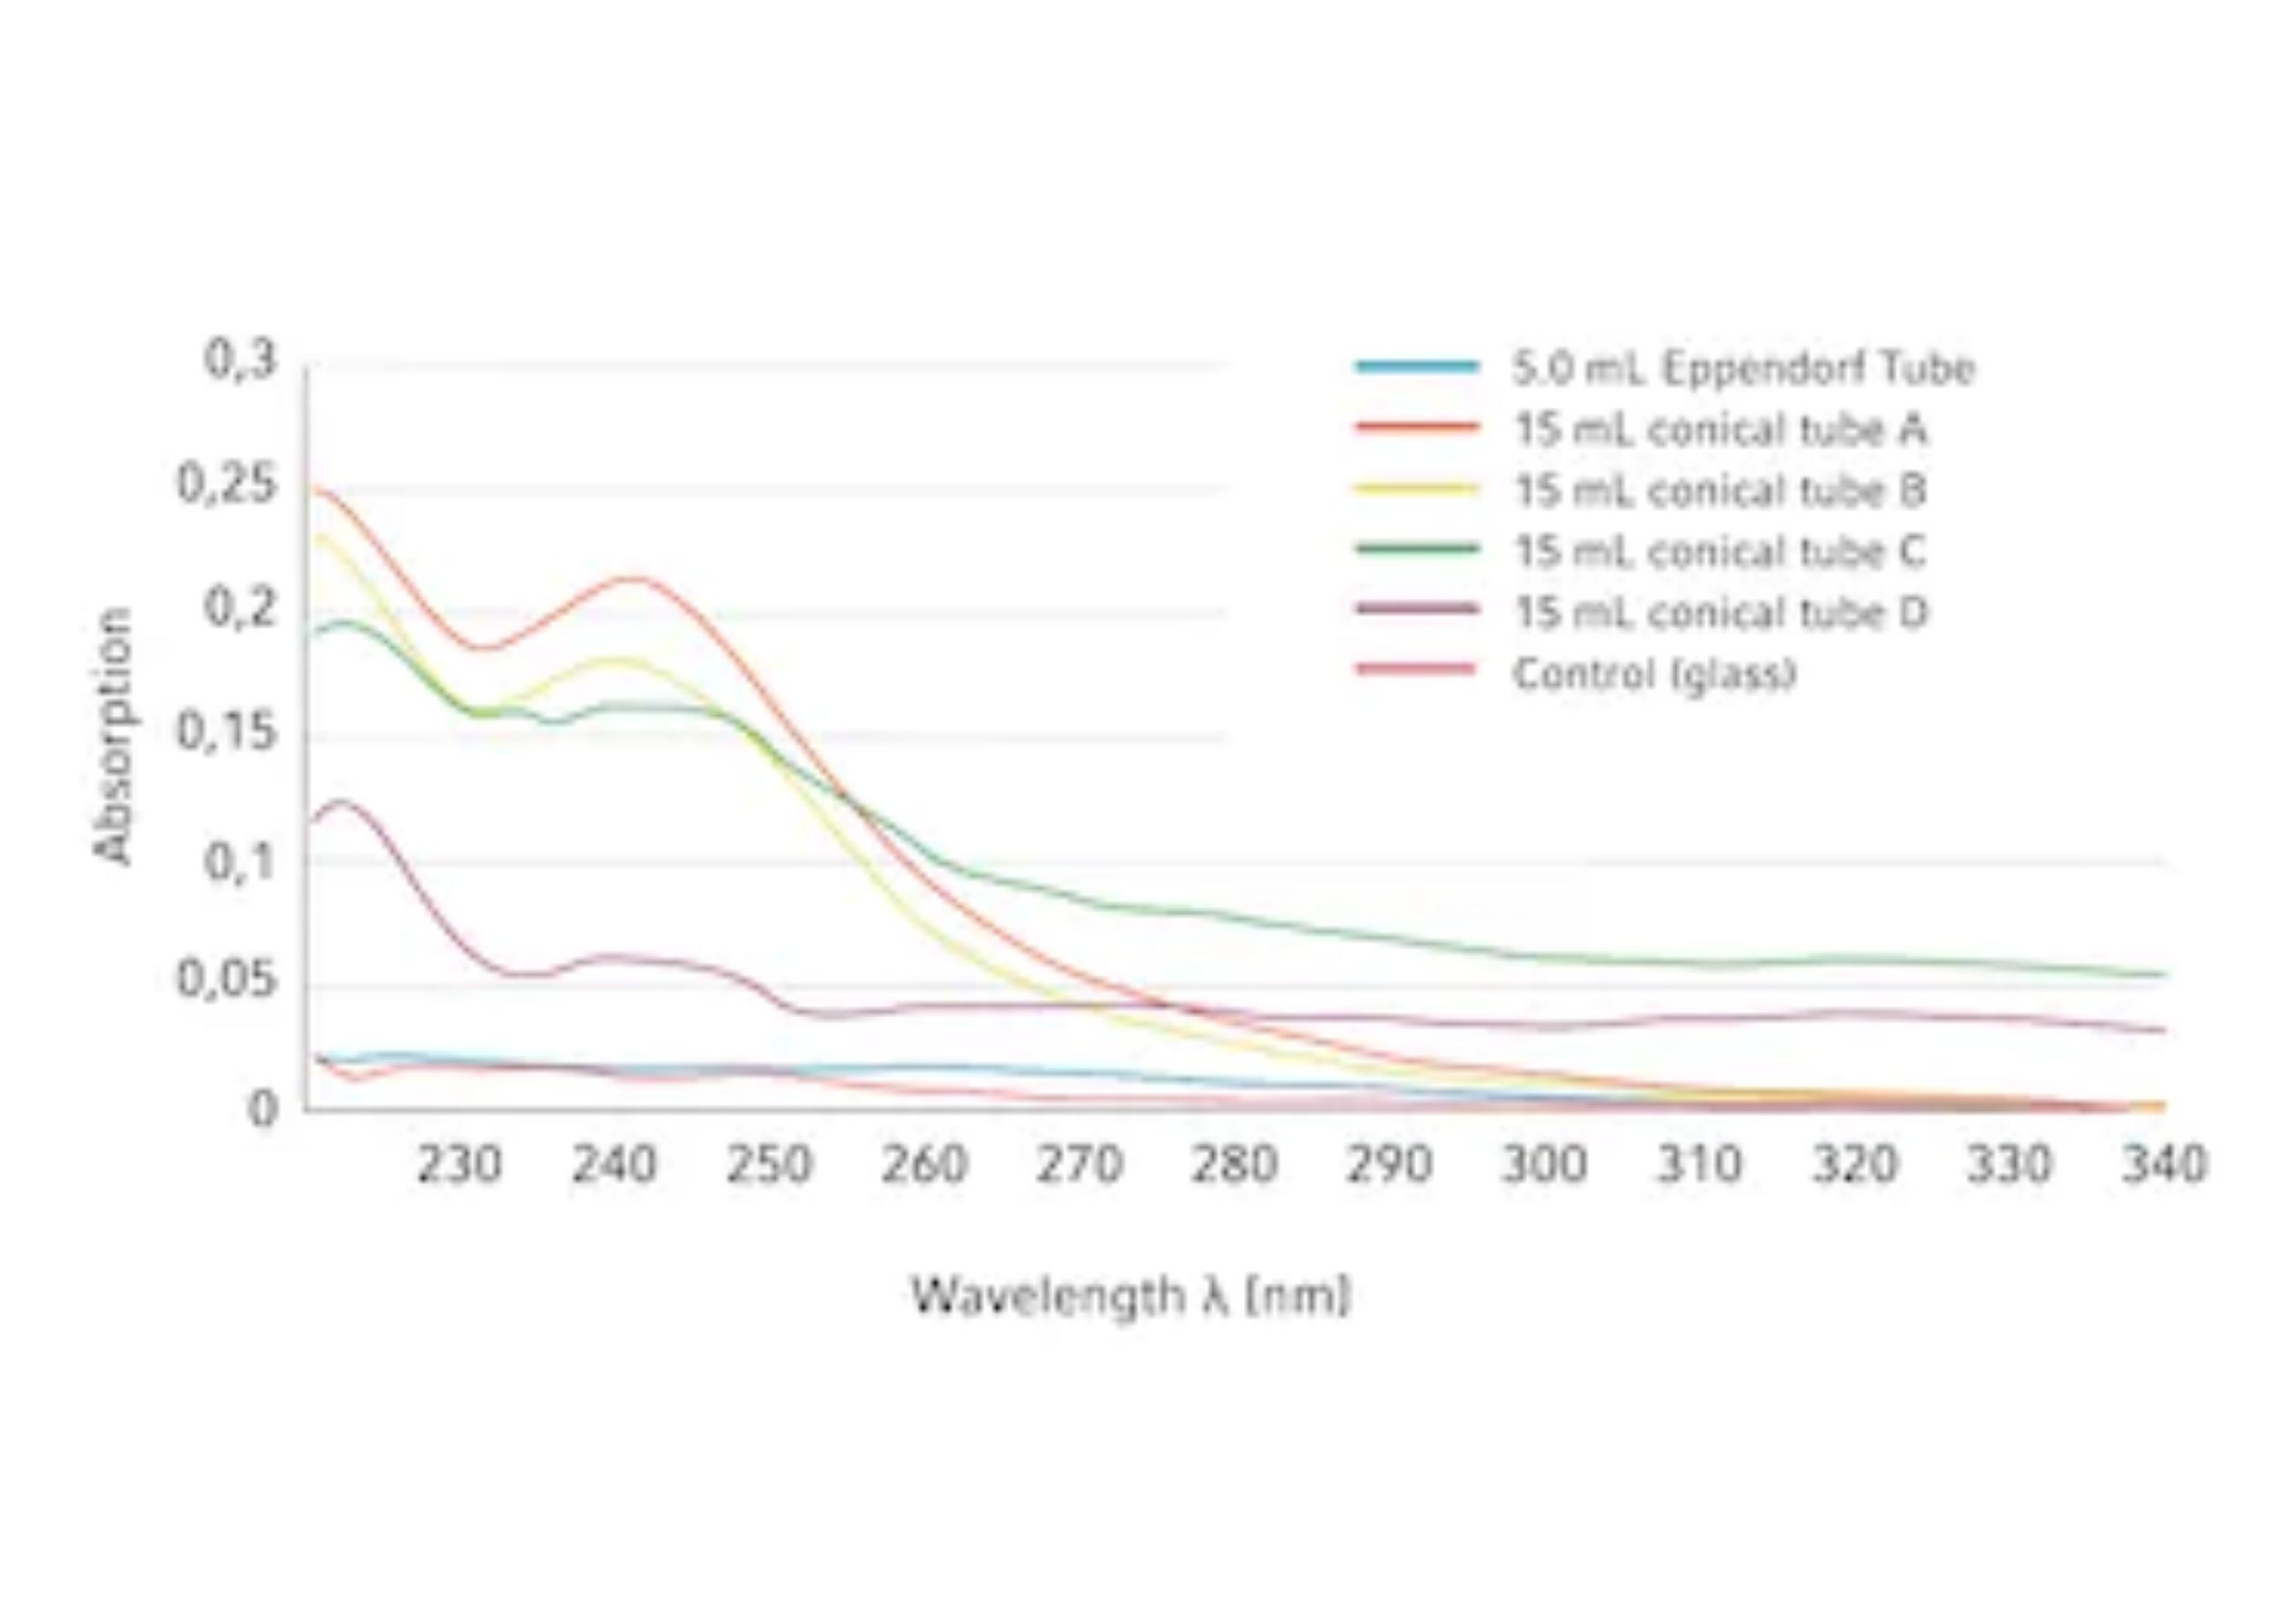 Eppendorf 5.0 mL 离心管起始套装, PCR洁净级, 400个(4包x100个), 2个离心管架, 8个通用转子适配器, 其孔径大小可放置15mL 锥形离心管，0030119380，Eppendorf，艾本德